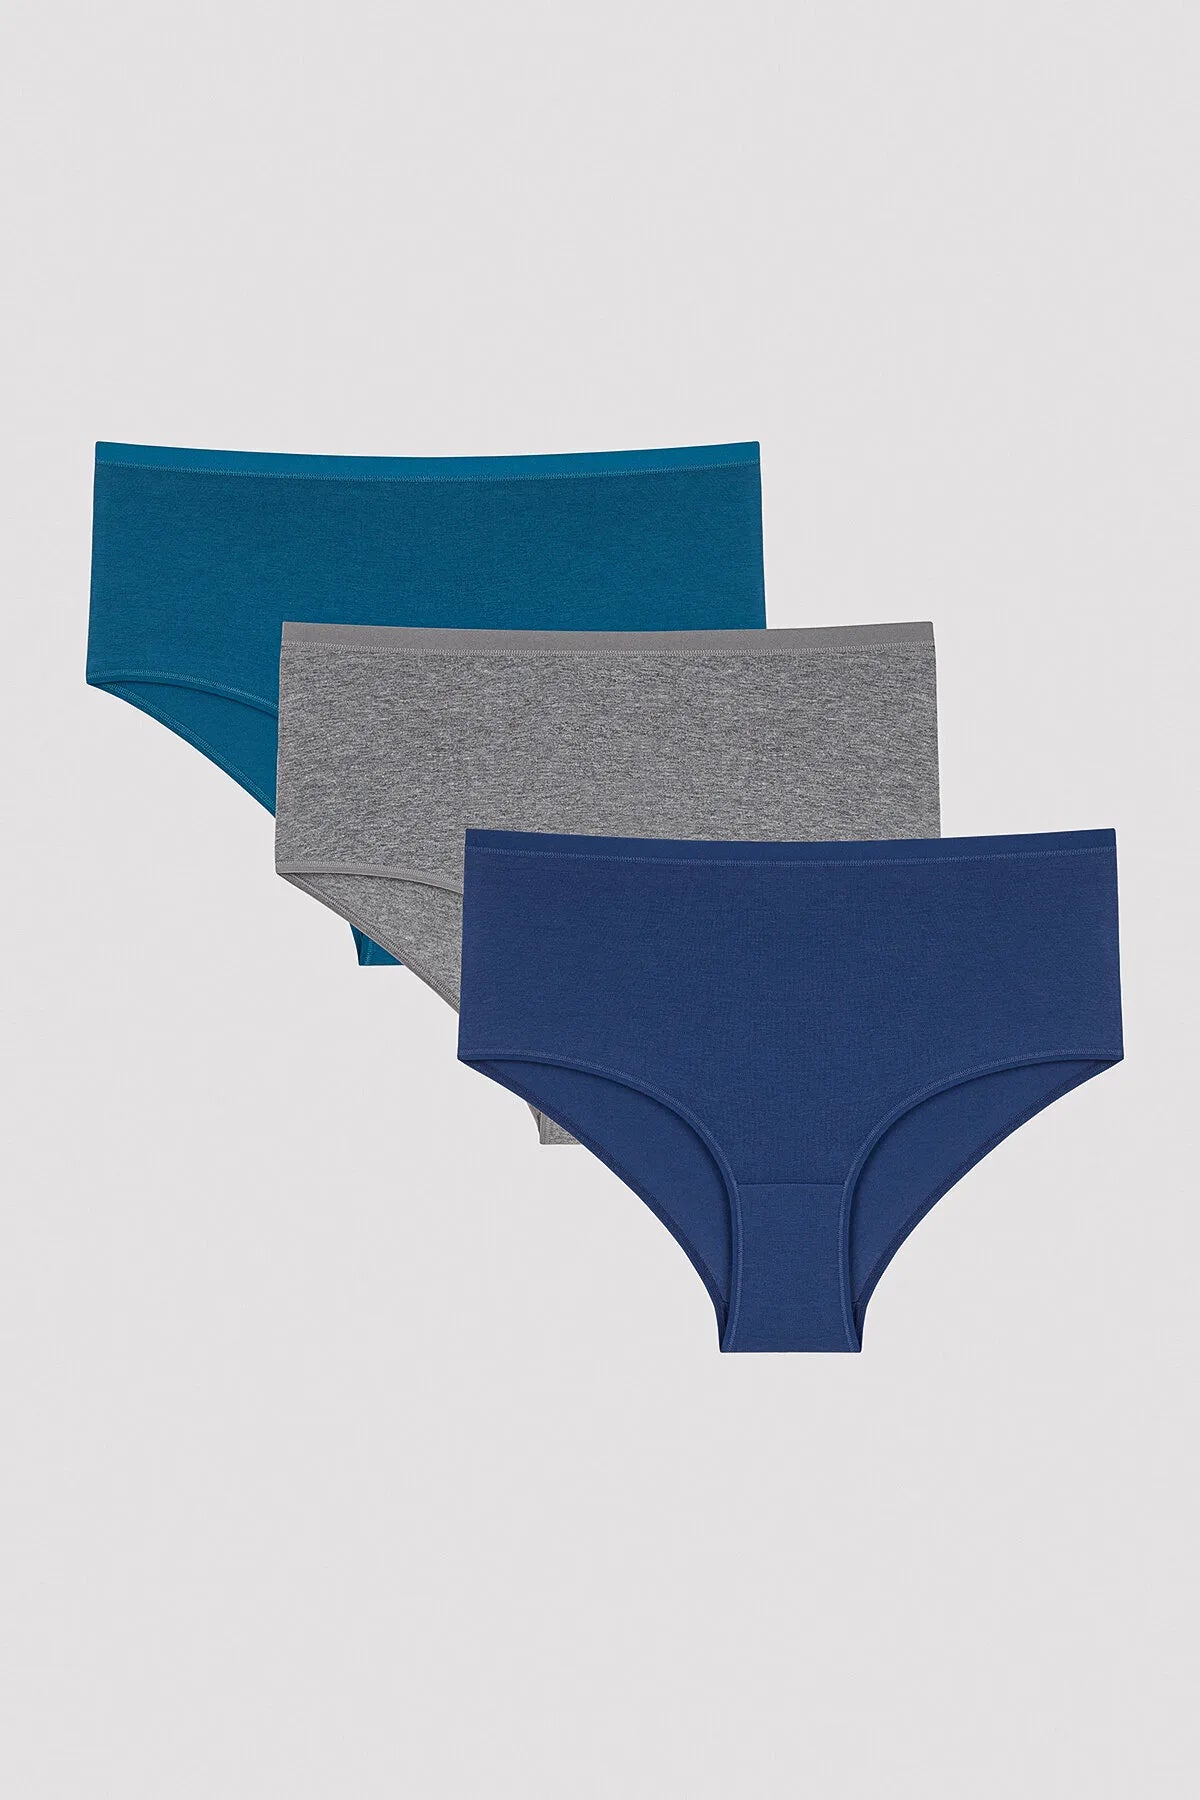 Deep Ocean High Waist 3-Piece Slip Panties: A Fusion of Comfort and Minimalist Design